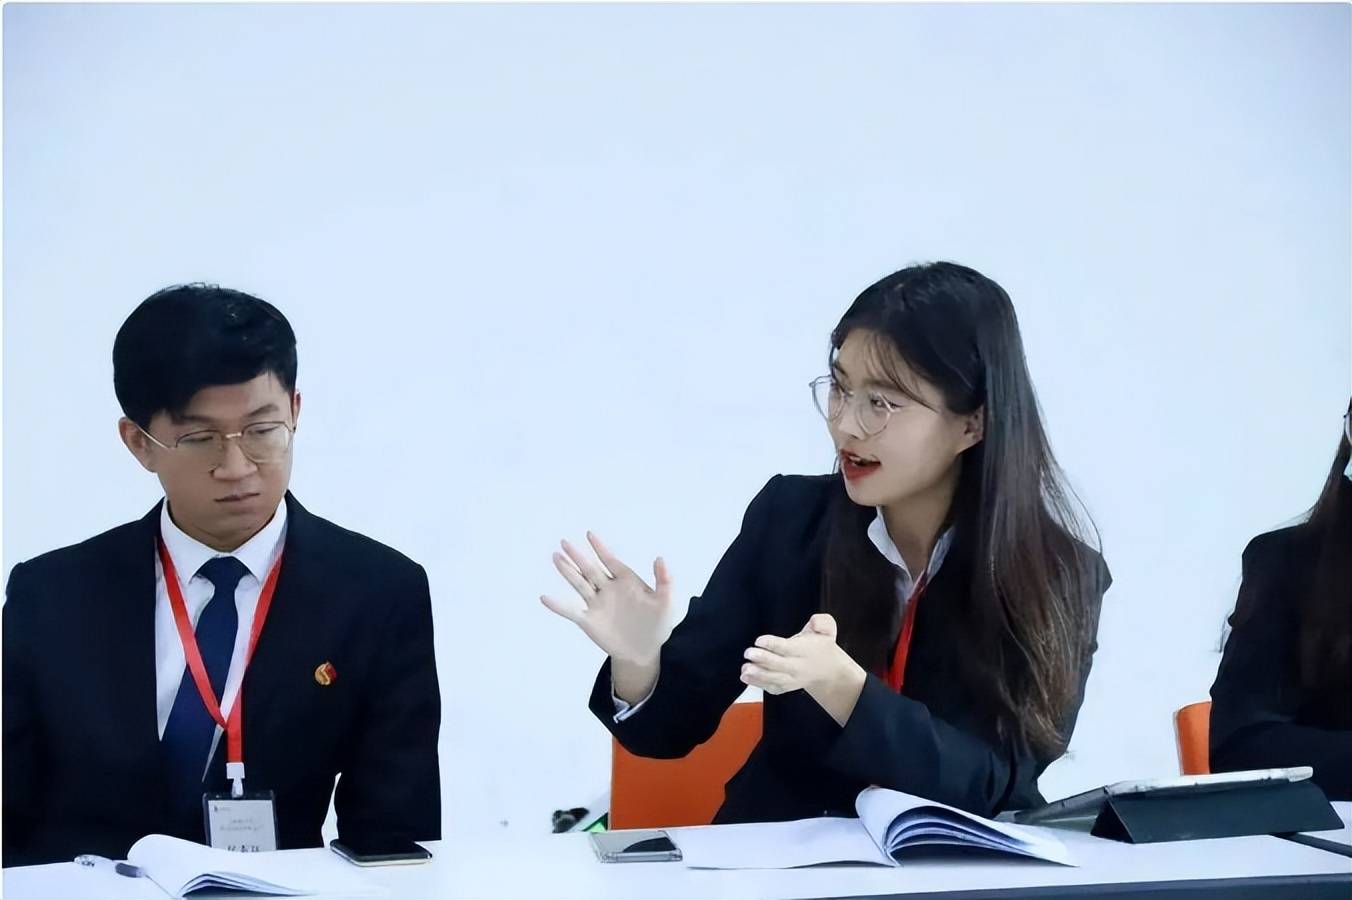 Talented female university student makes Chinese netizens admire - 4